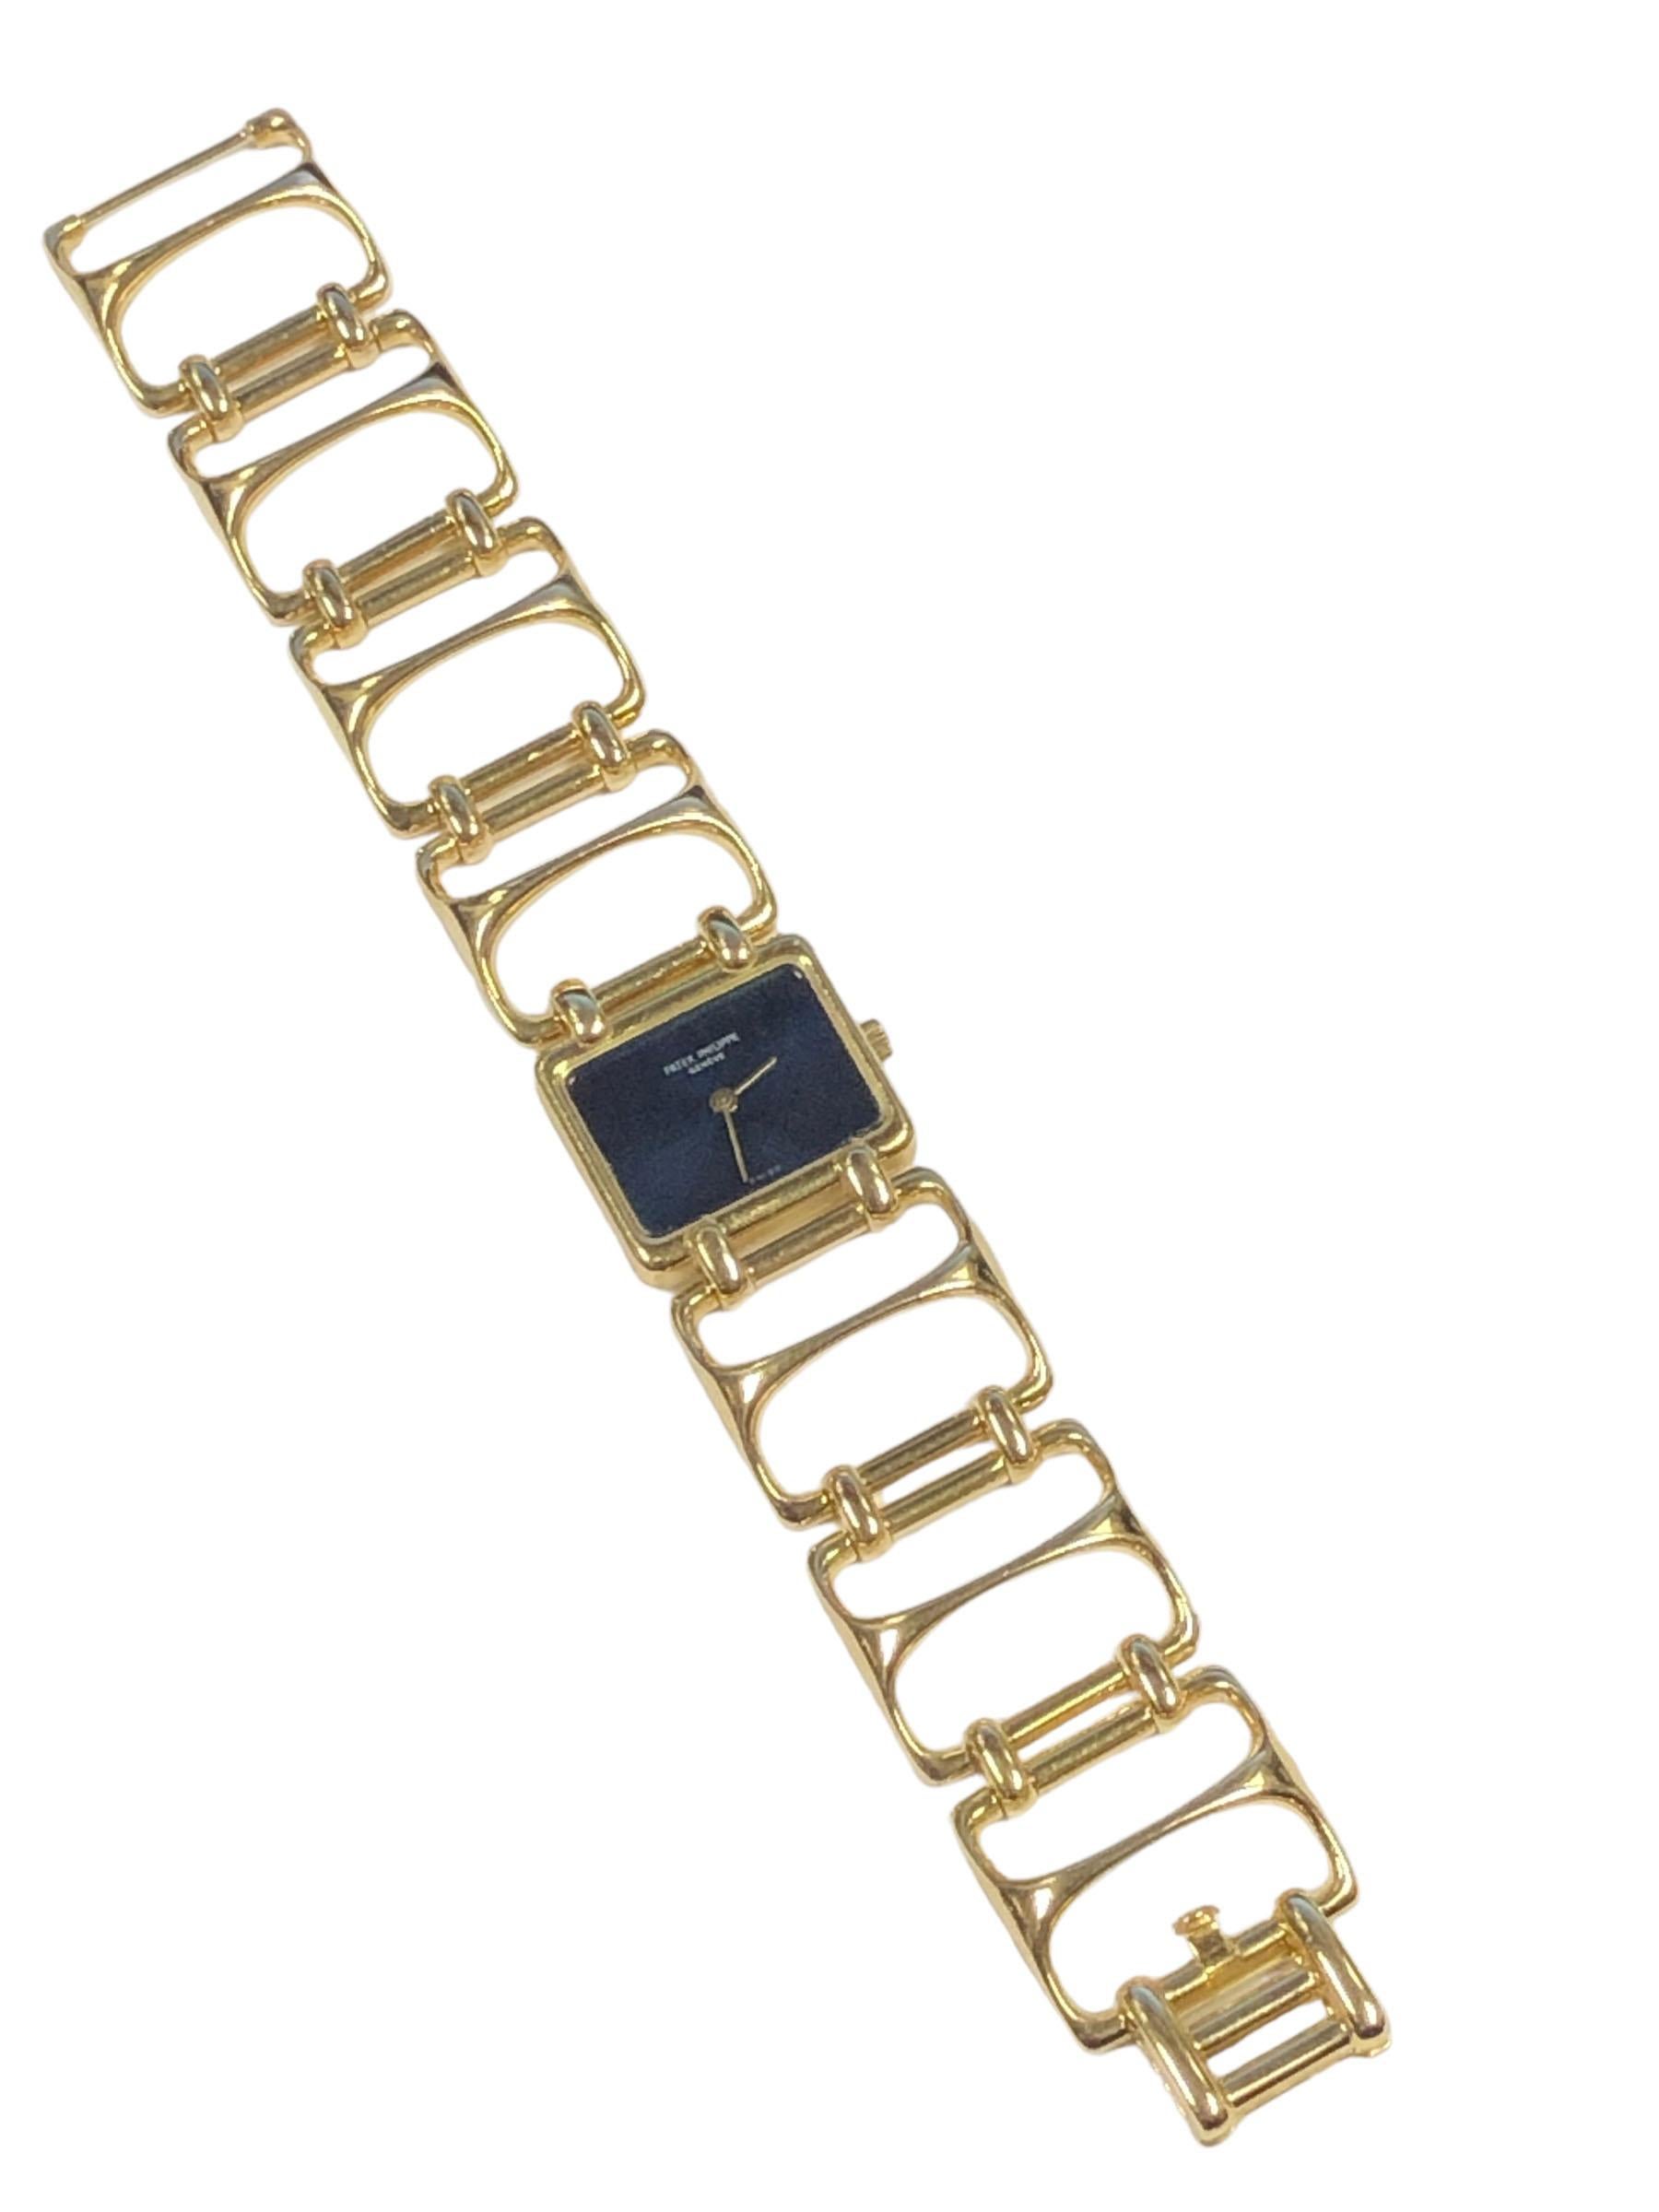 Patek Philippe 1970s Ref 4237 Mechanical Gold Bracelet Wrist Watch  For Sale 1